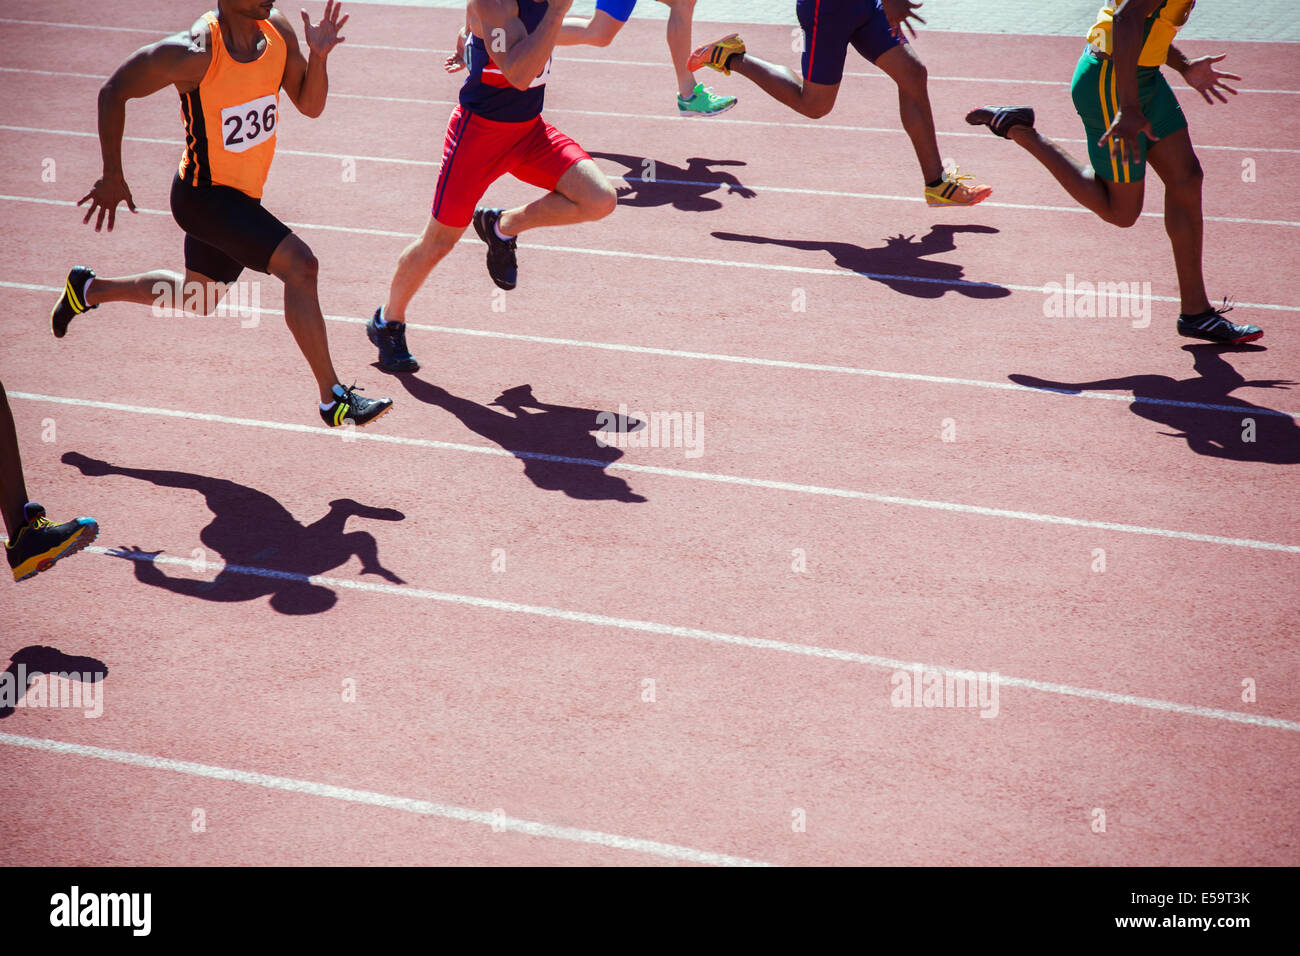 Runners racing on track Stock Photo